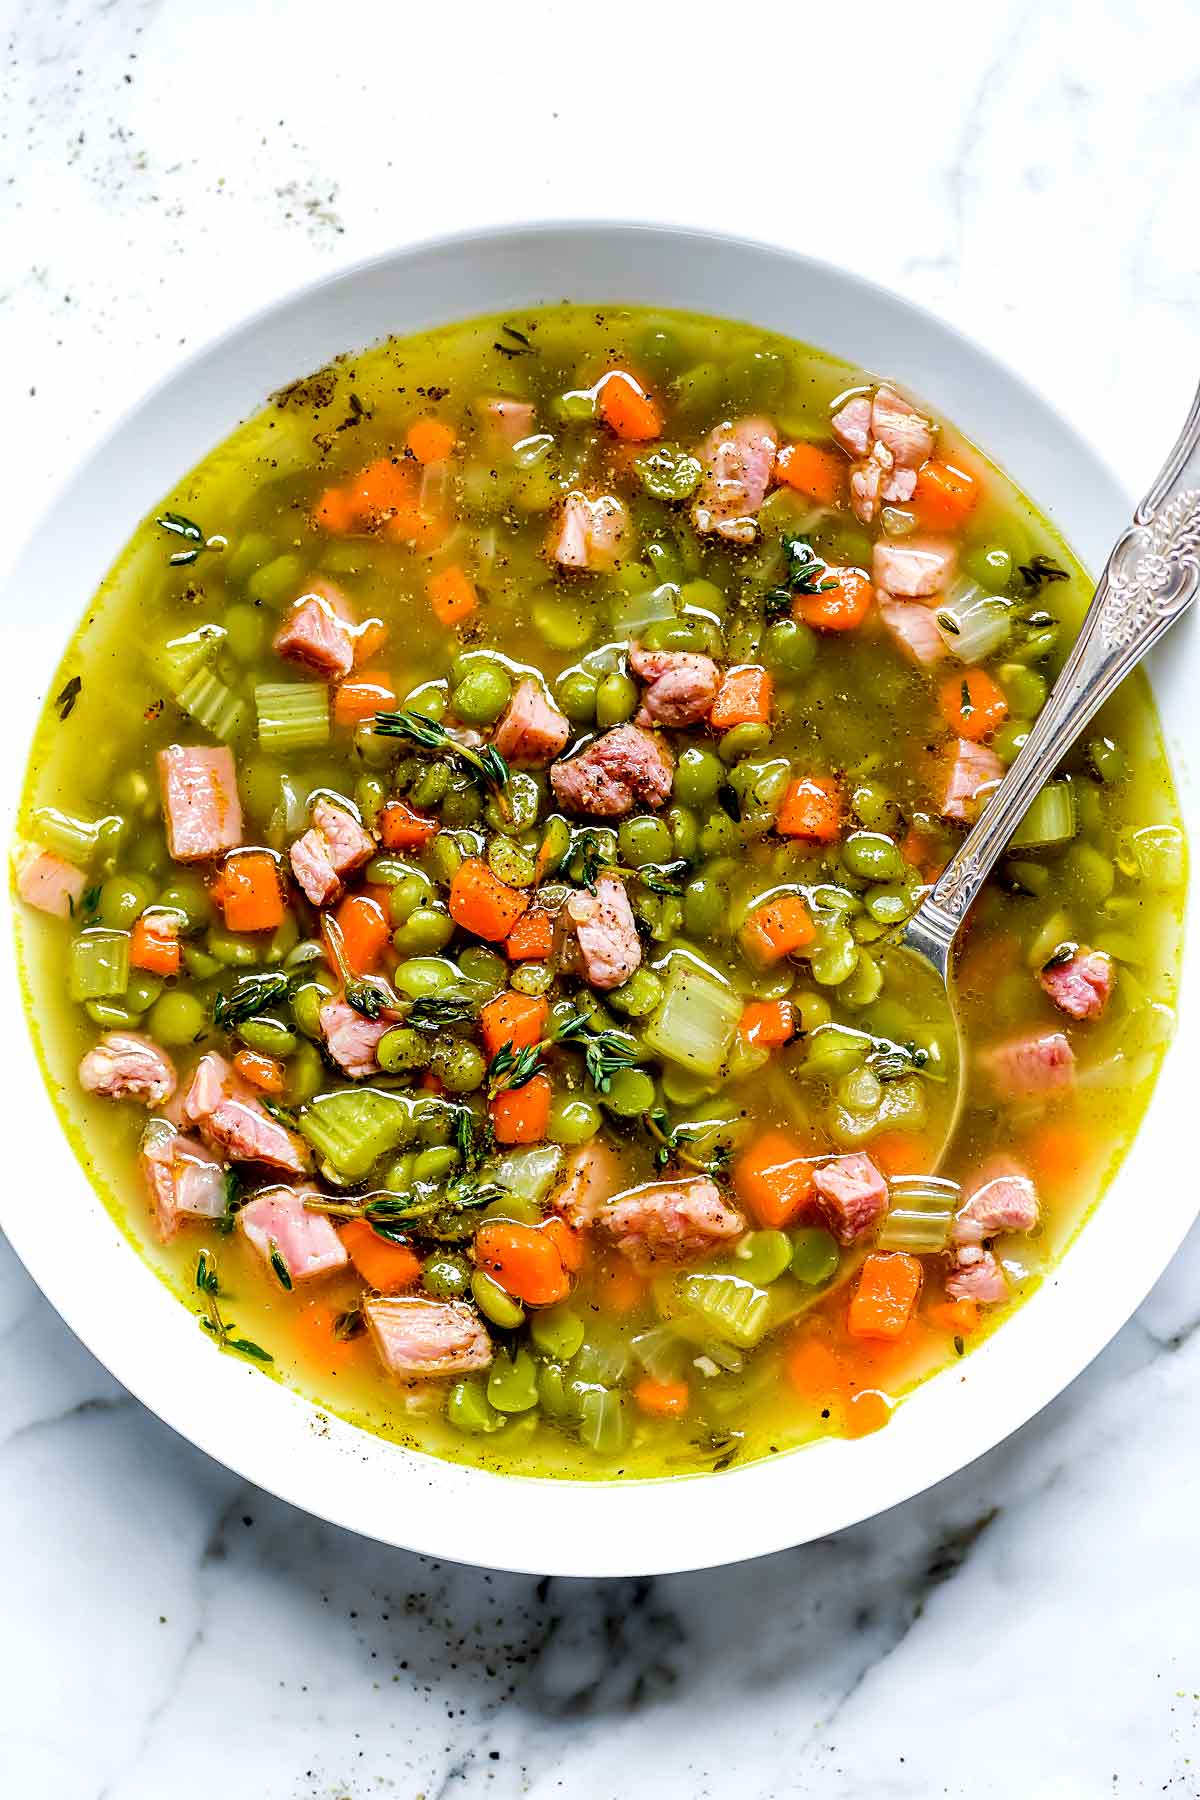 https://www.foodiecrush.com/wp-content/uploads/2020/04/Split-Pea-Soup-foodiecrush.com-014.jpg